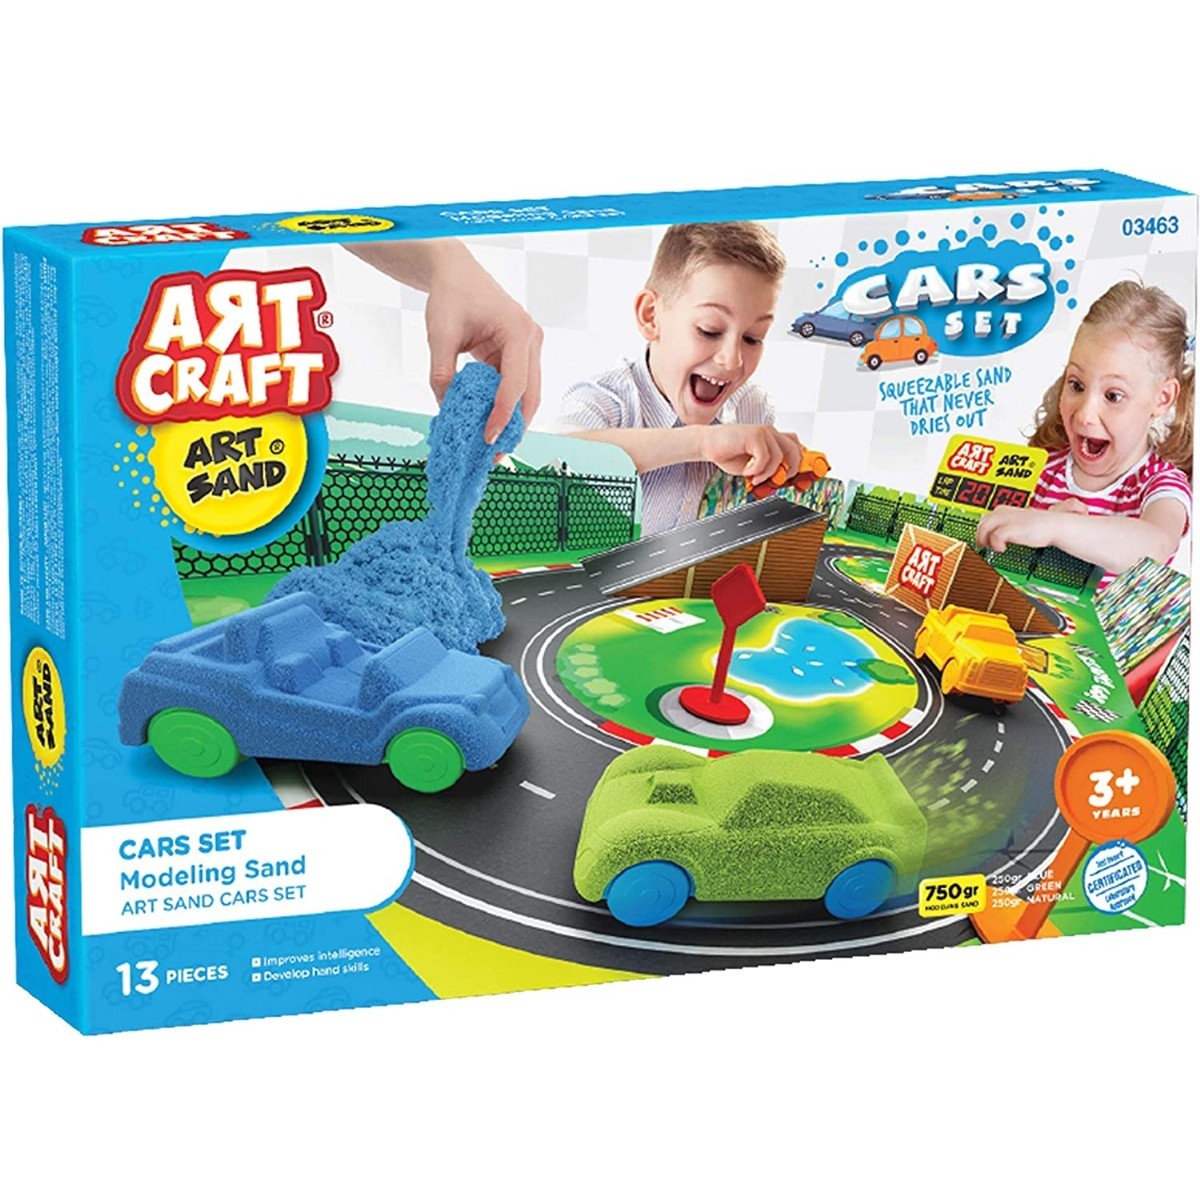 Art Craft Arabalar Seti Kinetik Oyun Kumu 750 Gr 03463 Oyun Hamurlari Kumlari Egitici Oyuncaklar Toolstoy